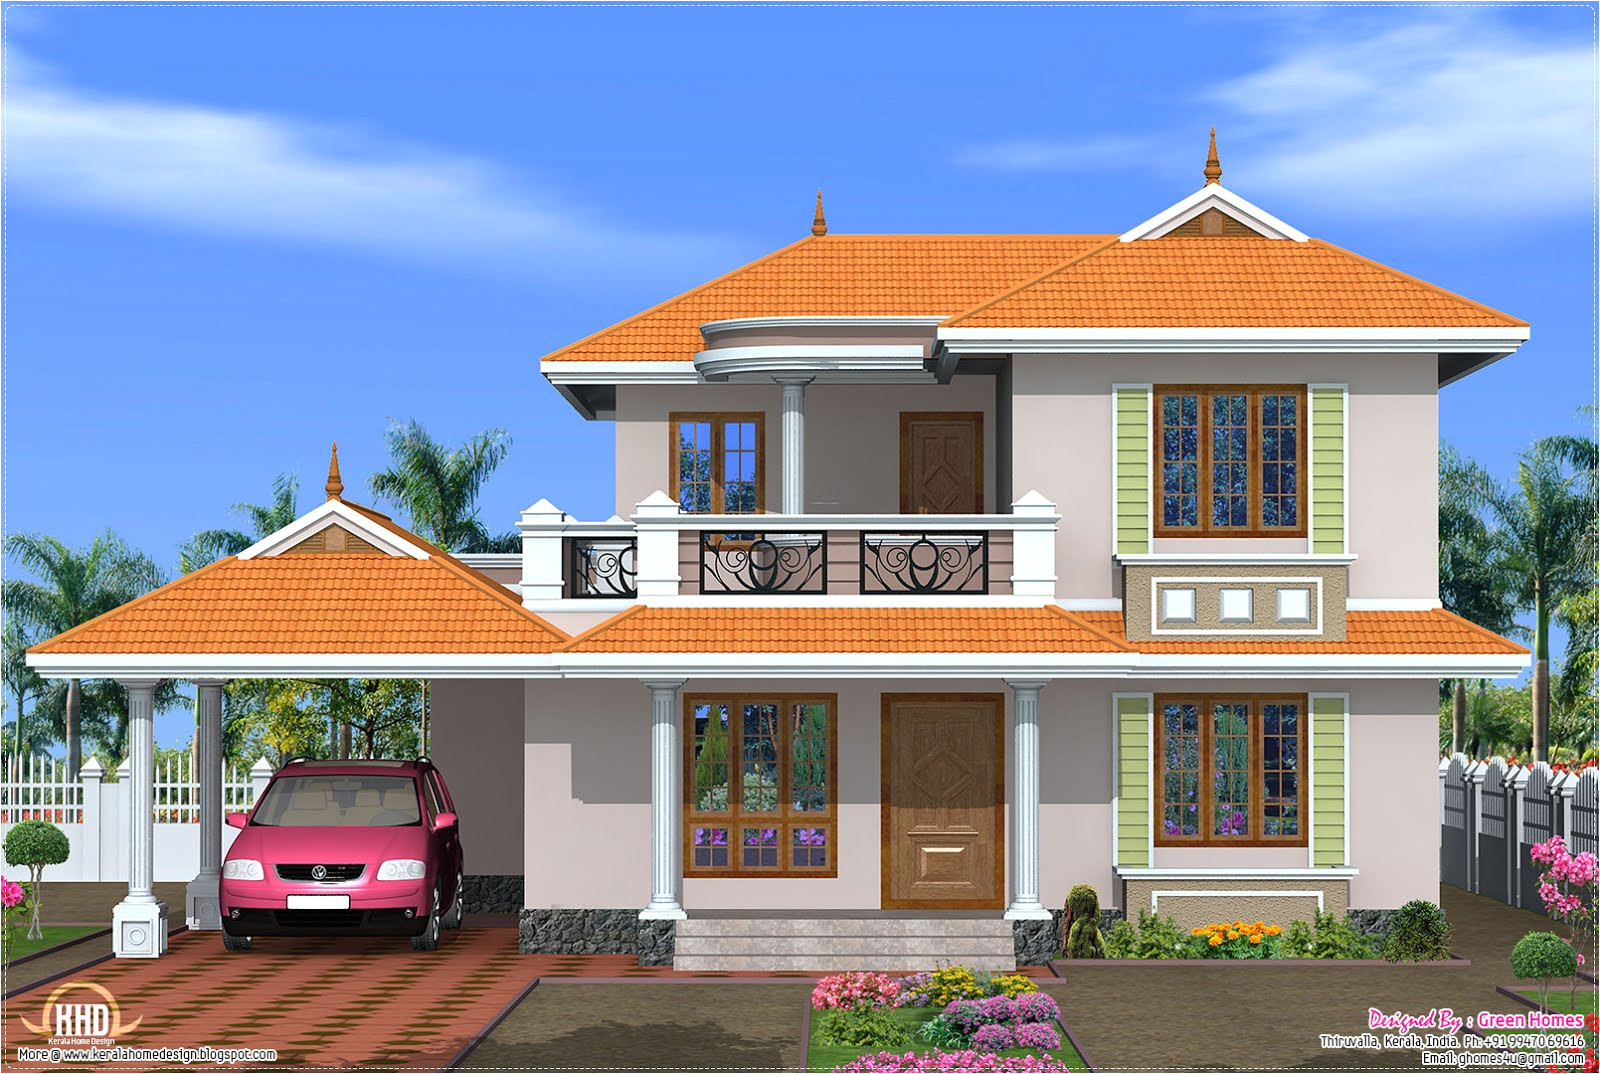 Model Home Plans Bedroom Kerala Model House Design Home Floor Plans Dma